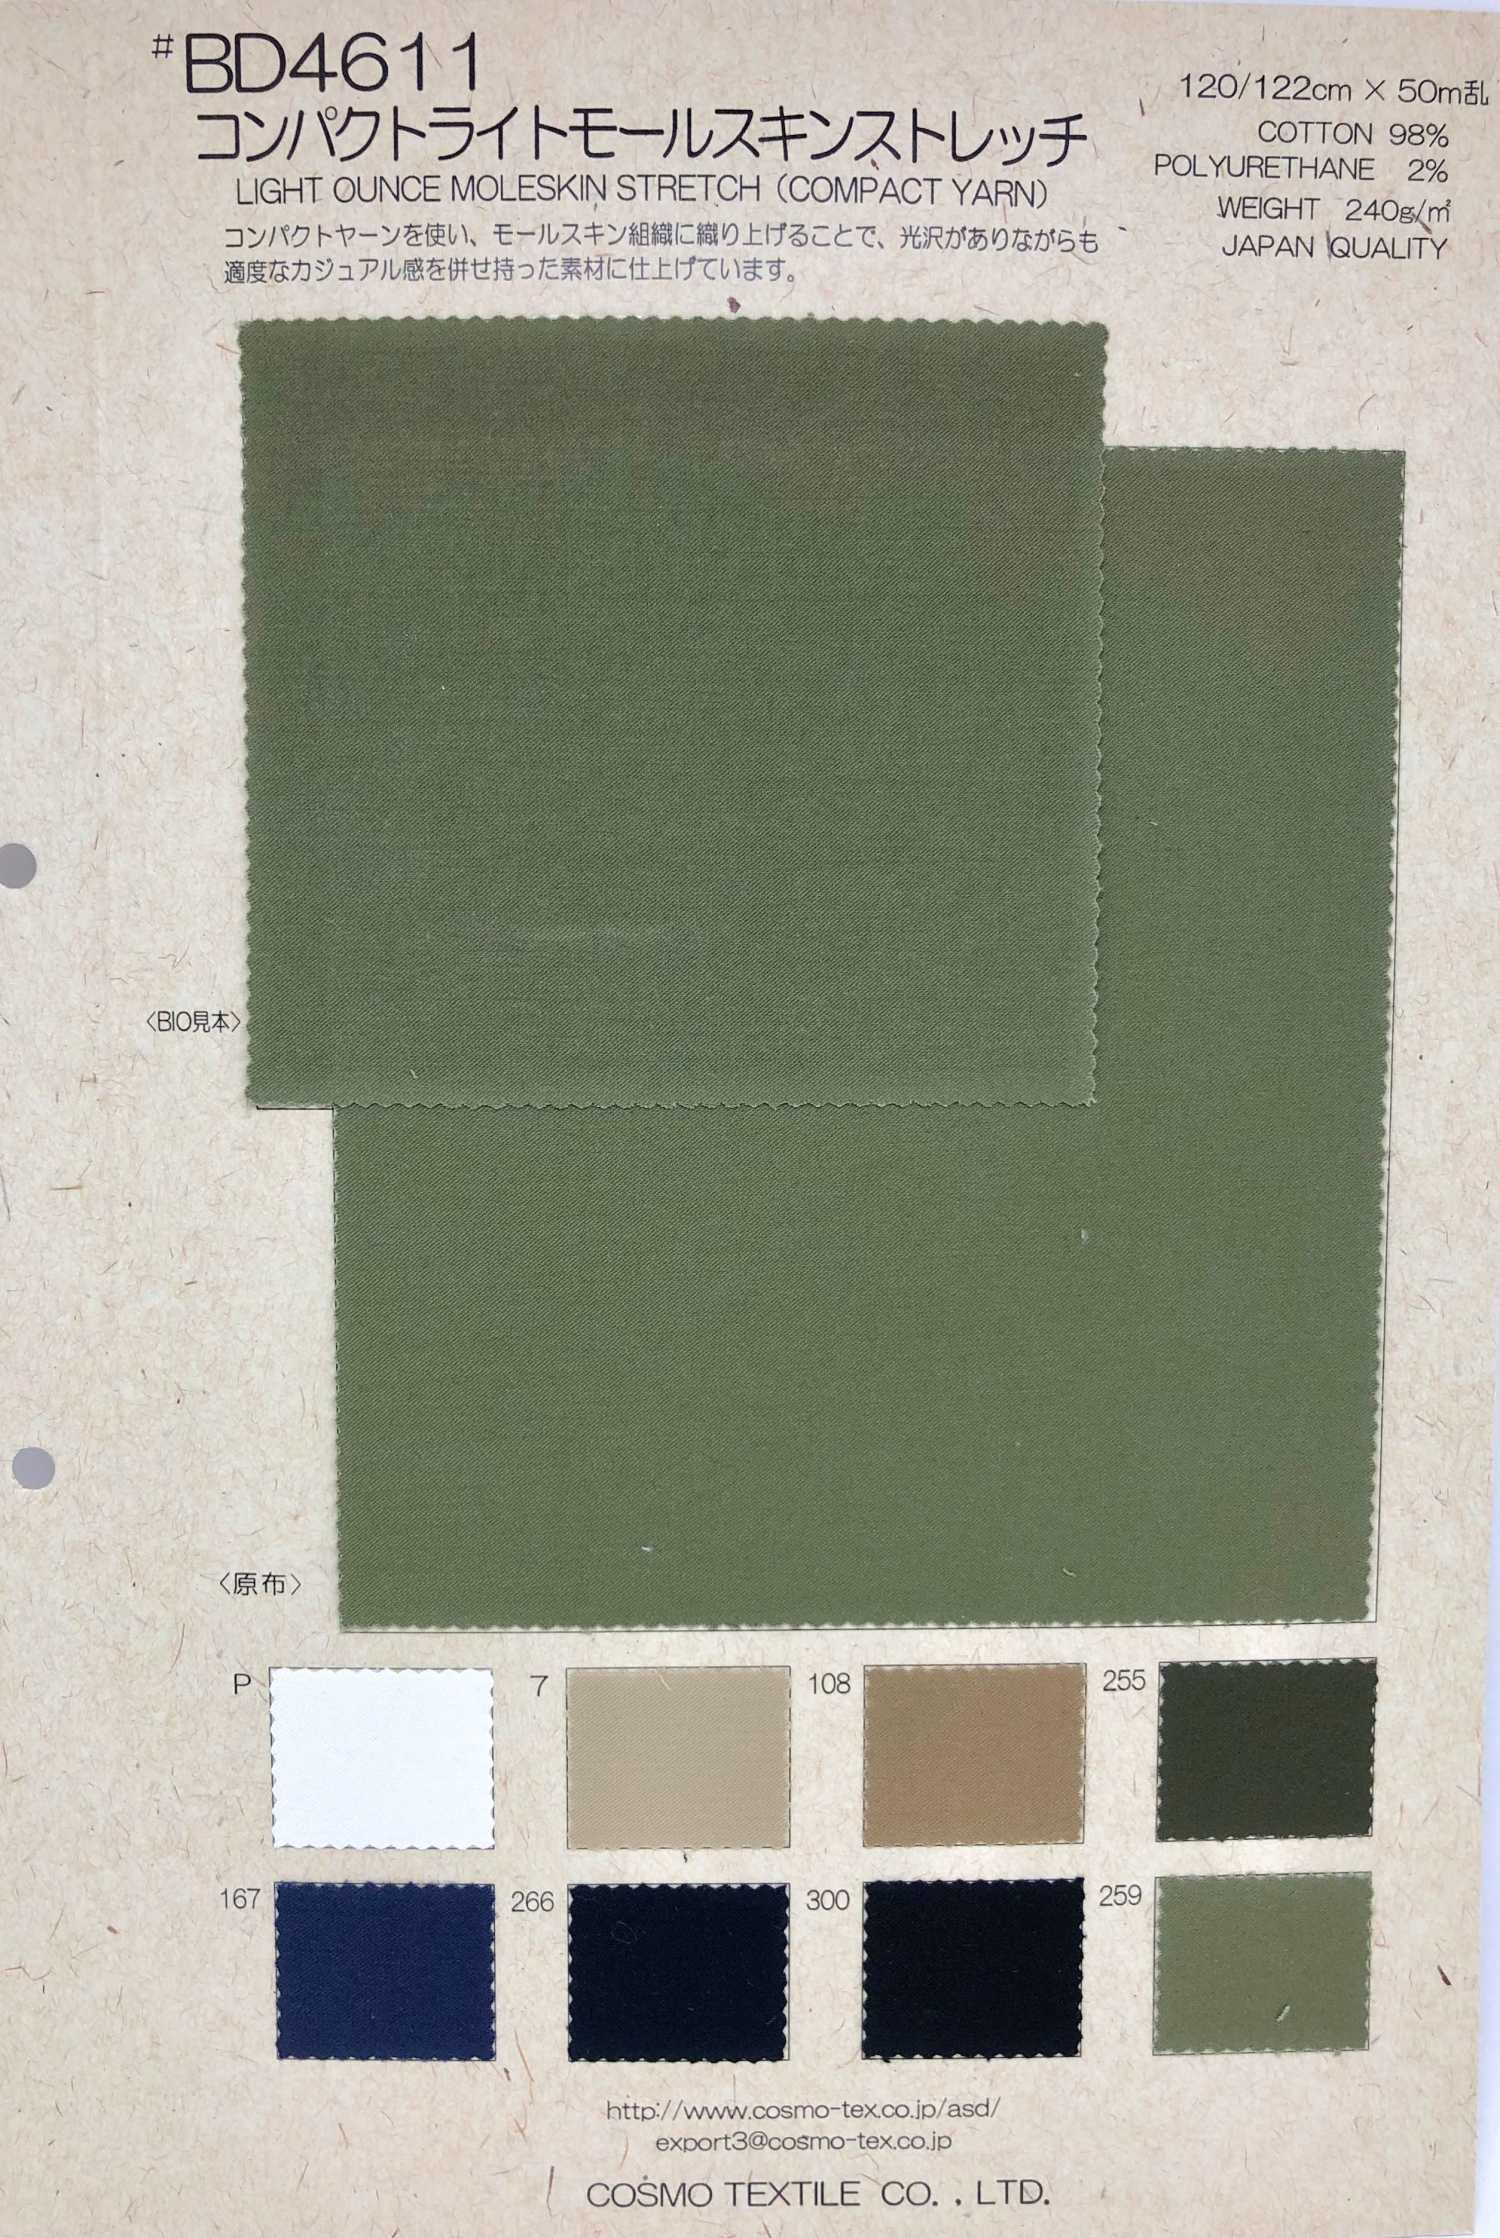 BD4611 [OUTLET] Estiramiento Ligero Compacto De Piel De Topo[Fabrica Textil] COSMO TEXTILE